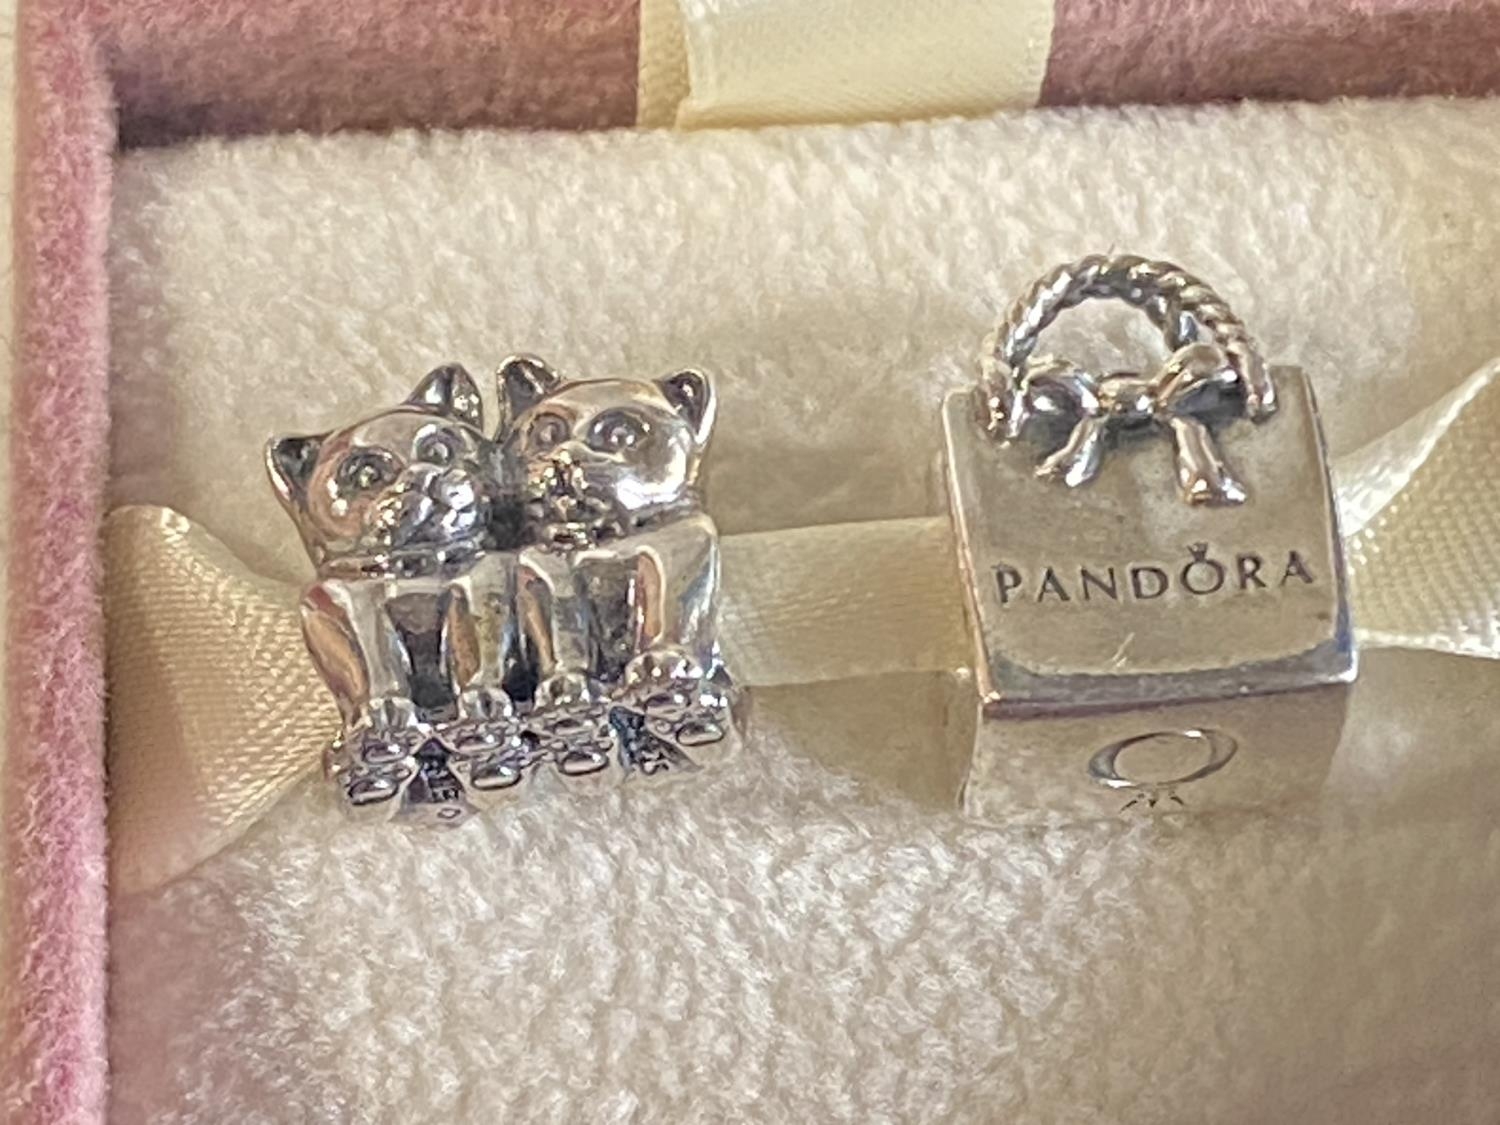 Two silver Pandora charms